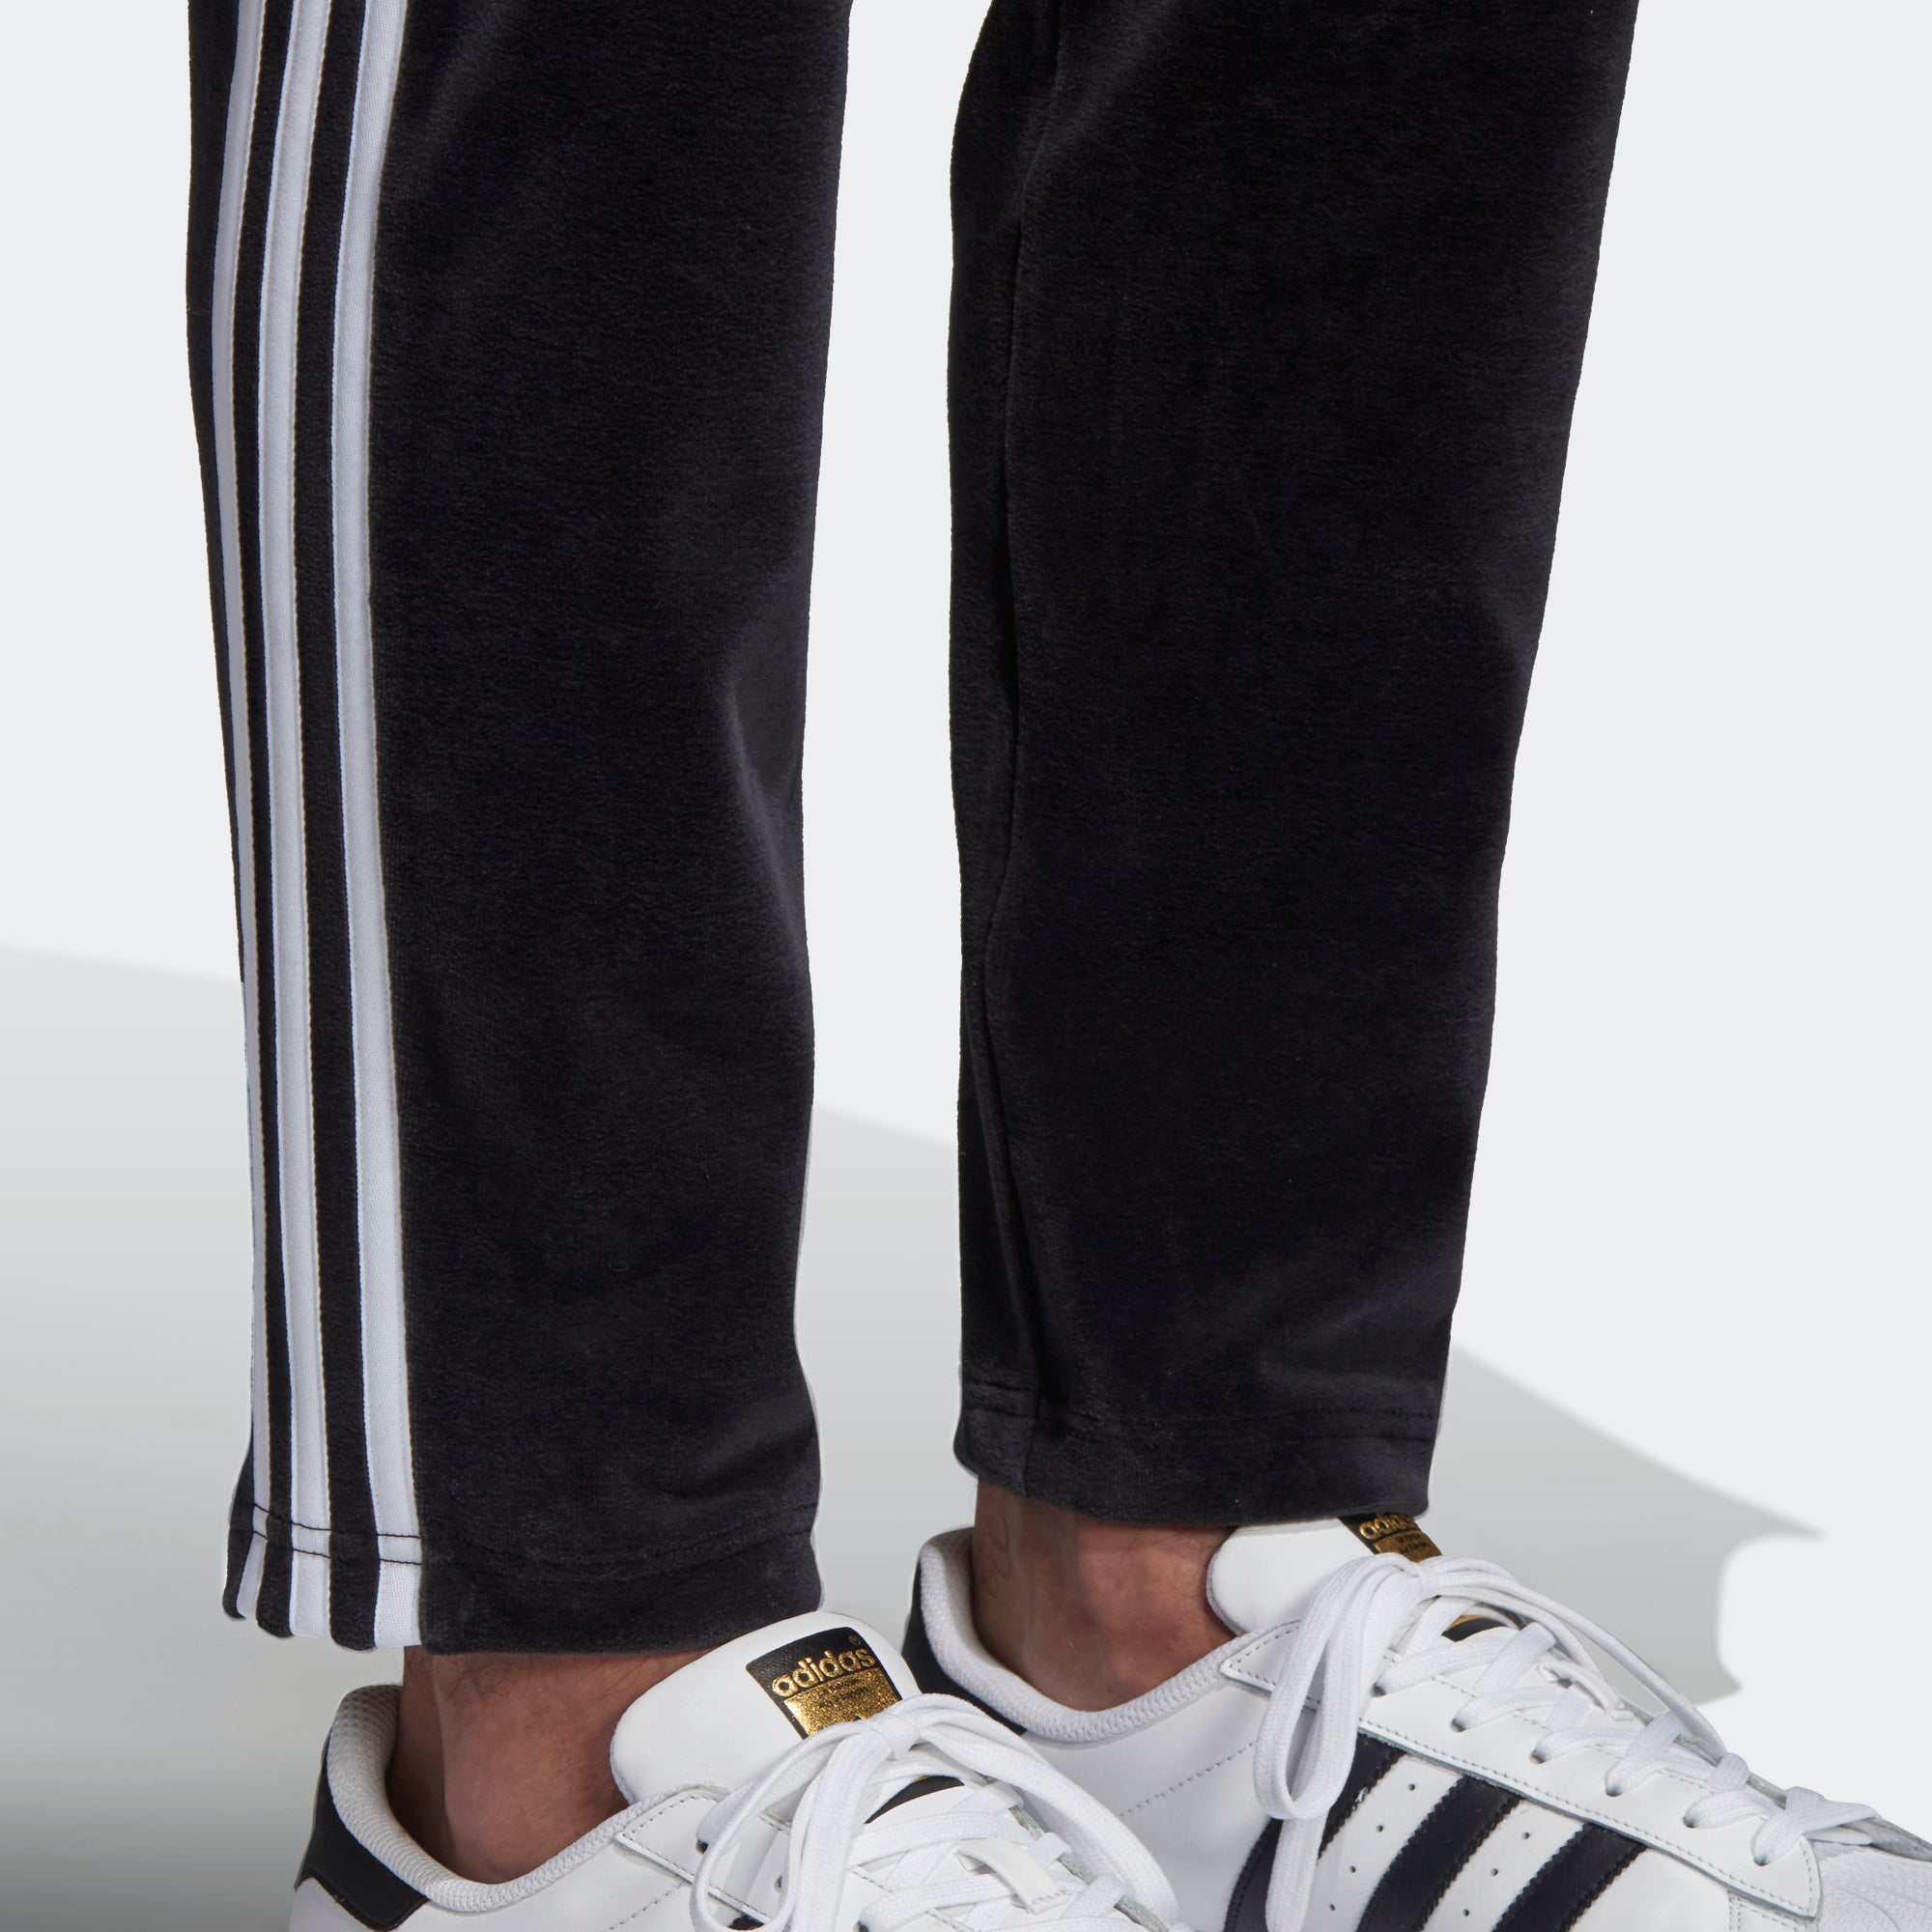 Black Adidas Pants Outfit Men